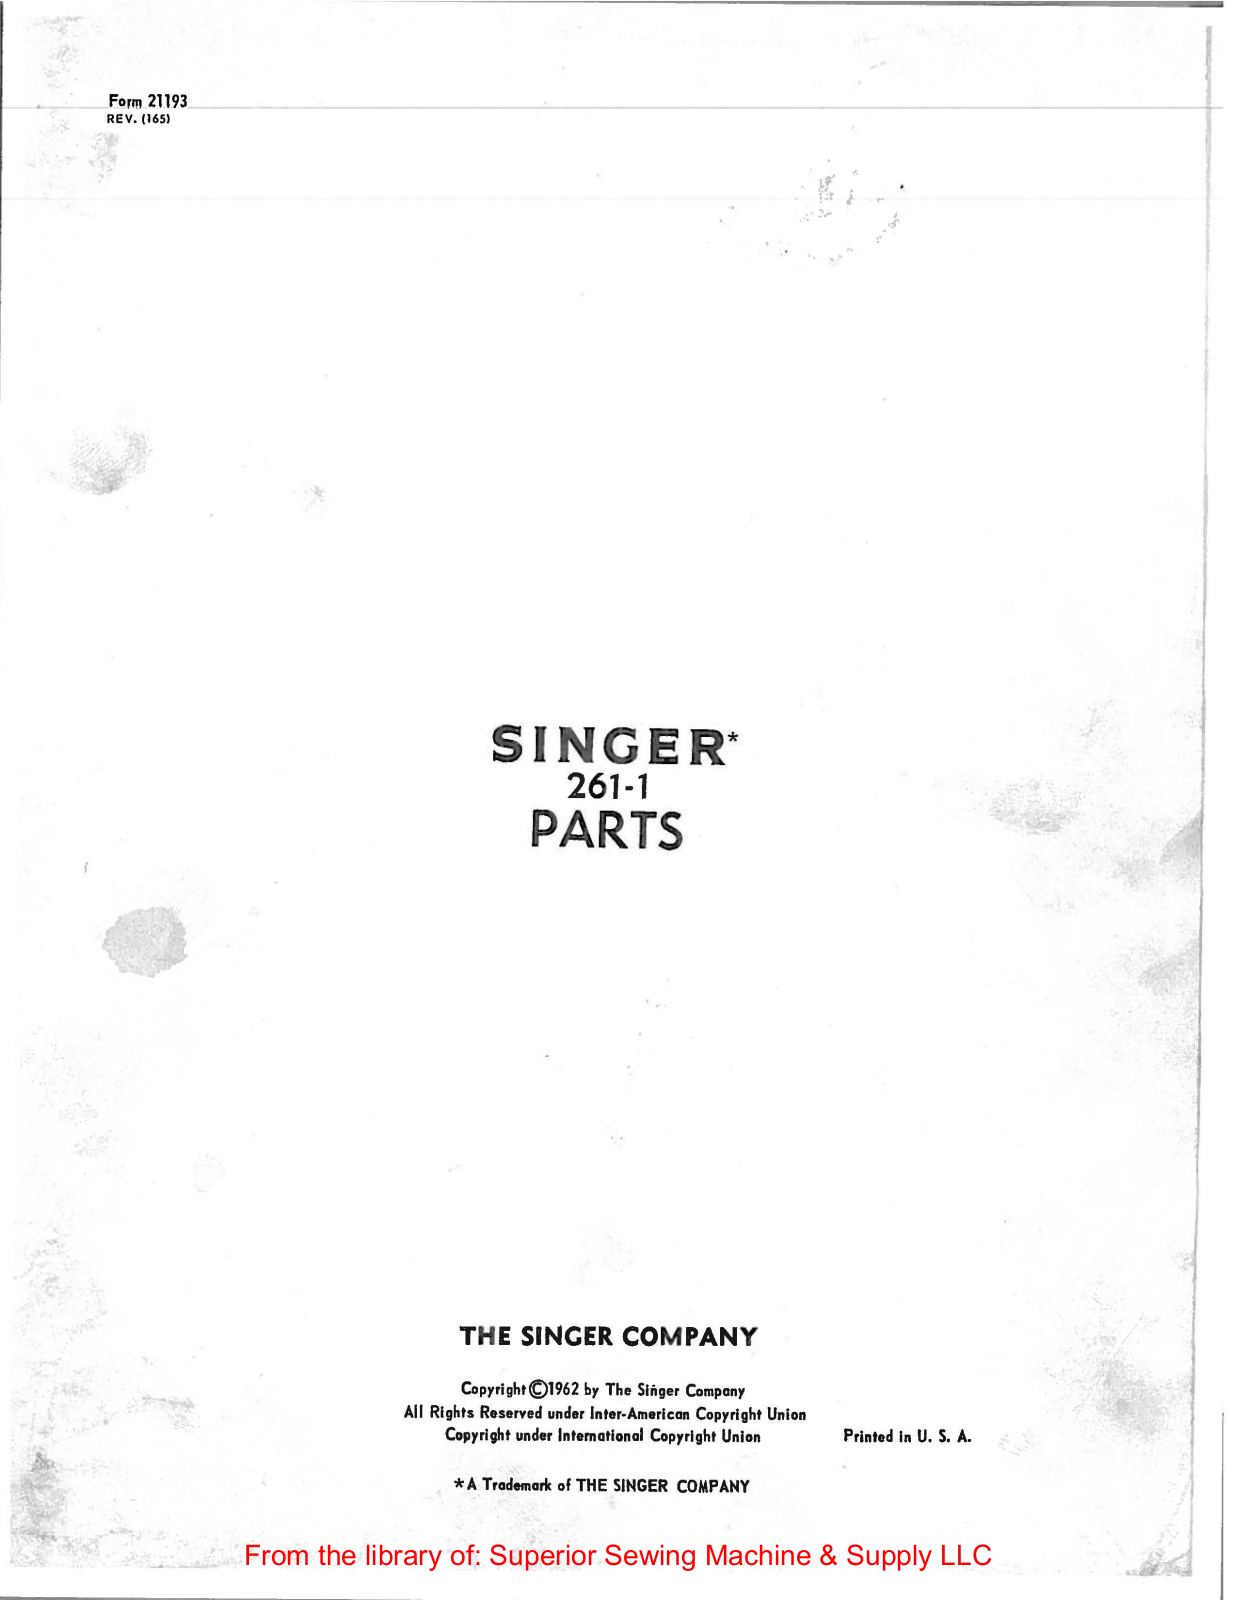 Singer 261-1, 26-3 Manual